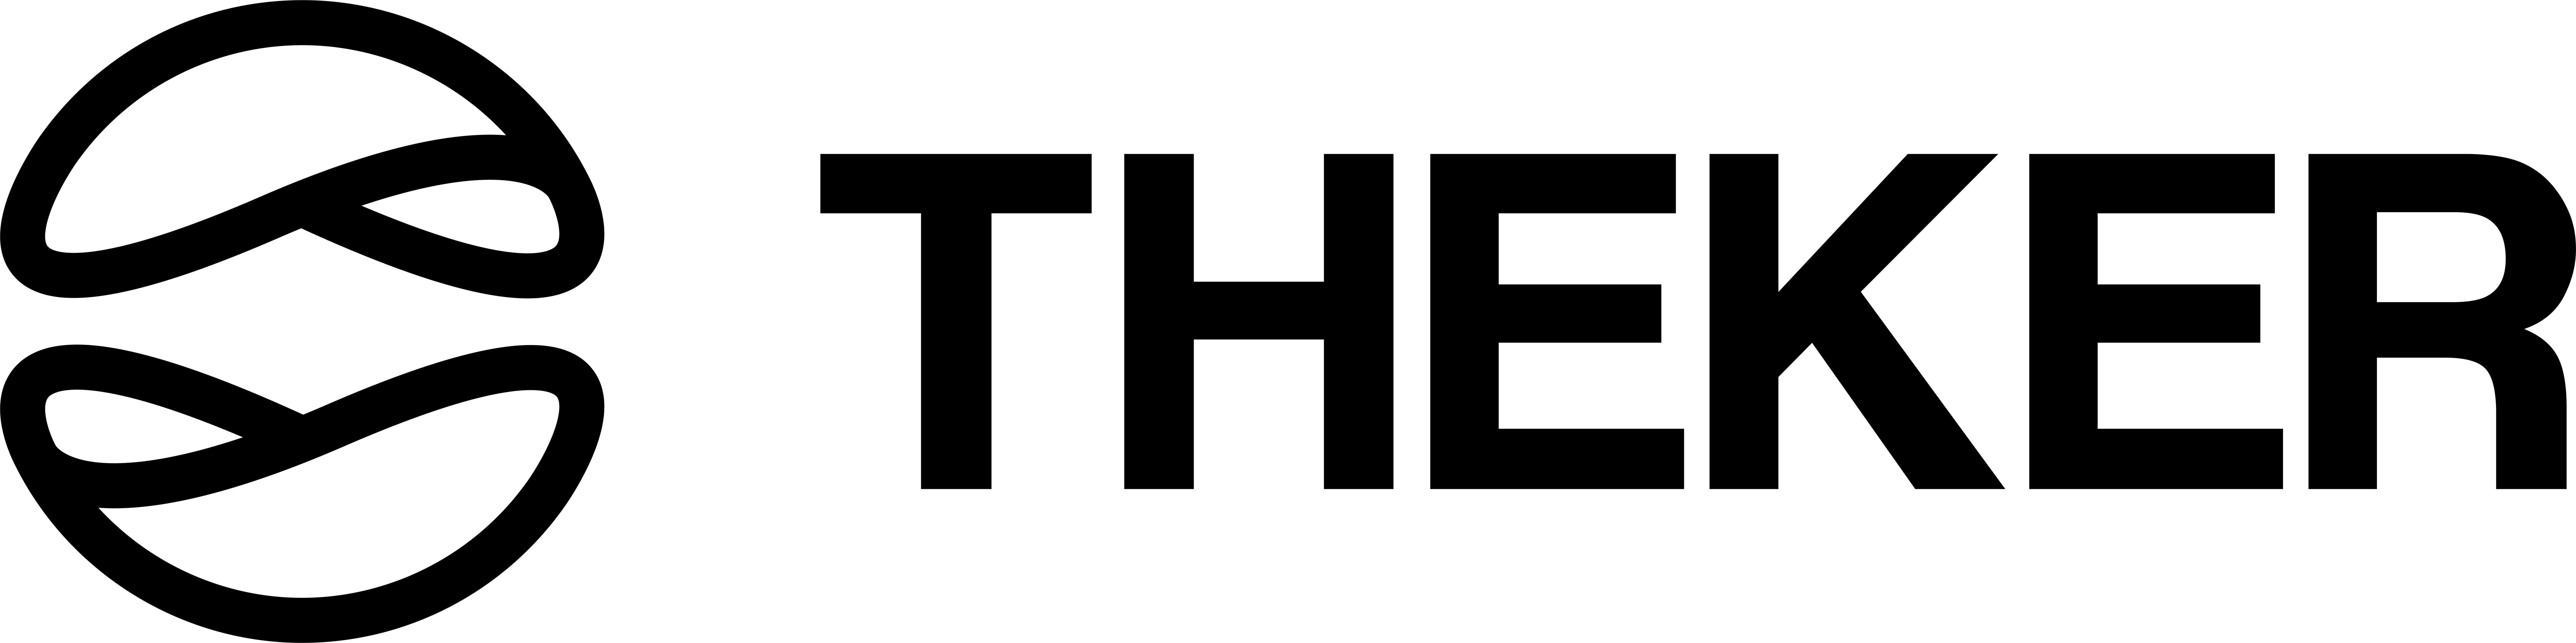 THEKER logo